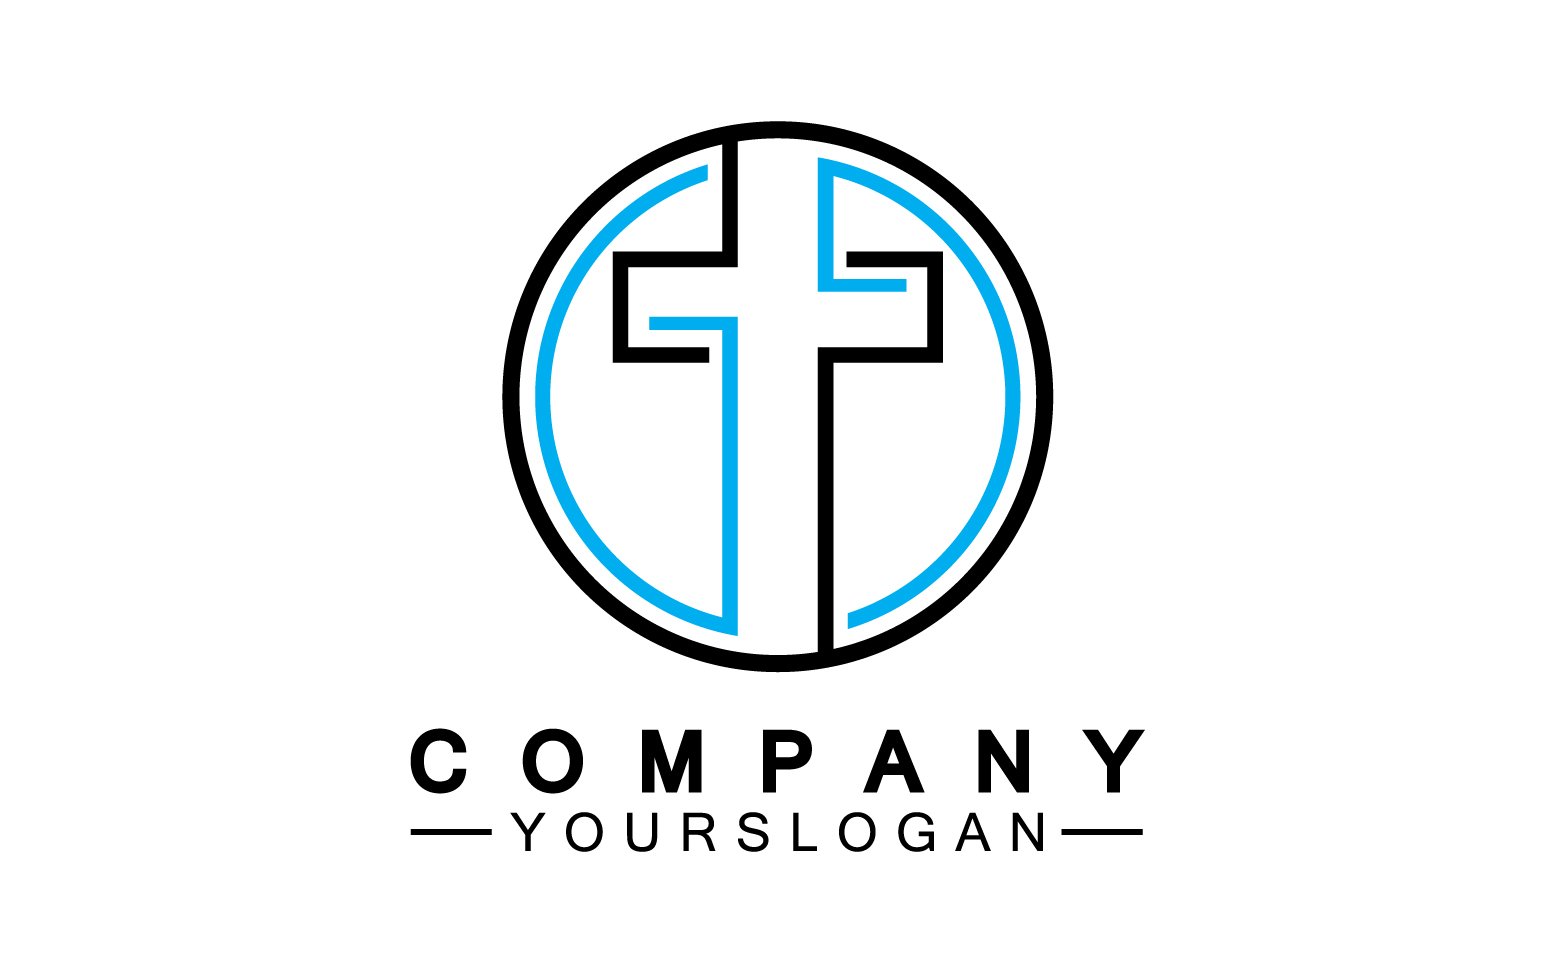 Christian cross icon logo vector v22